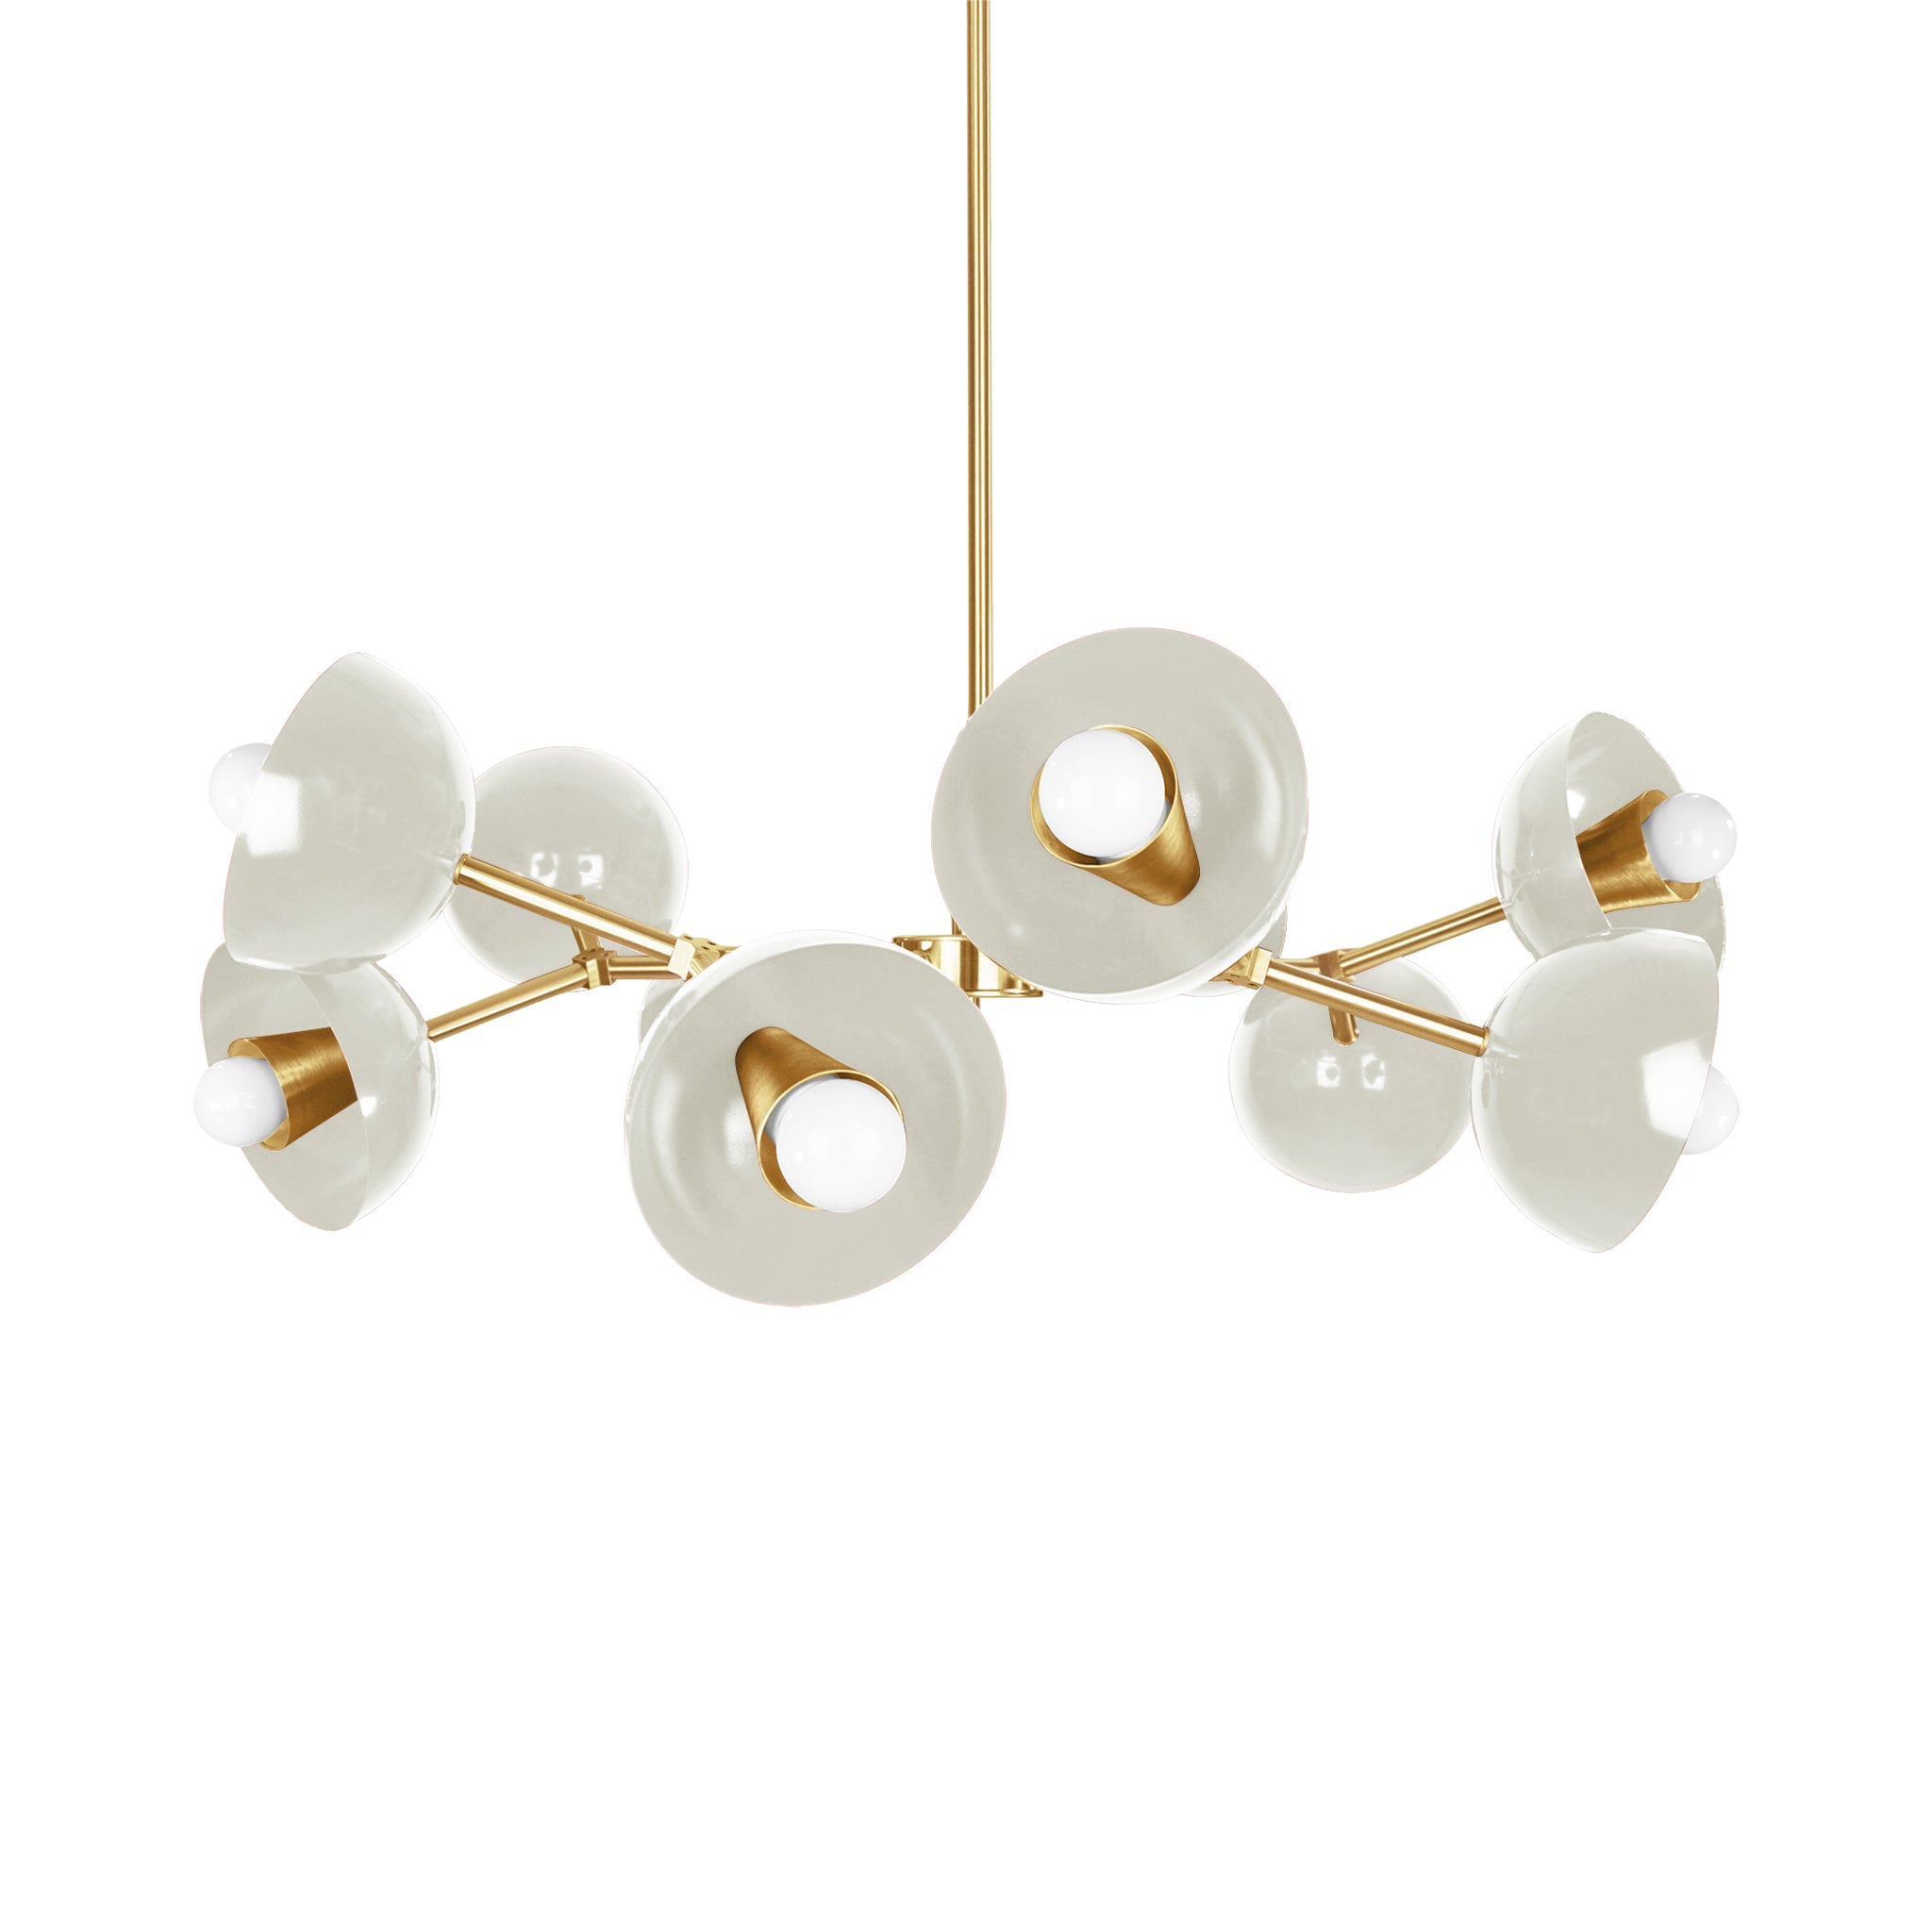 Brass and bone color Alegria chandelier 30" Dutton Brown lighting